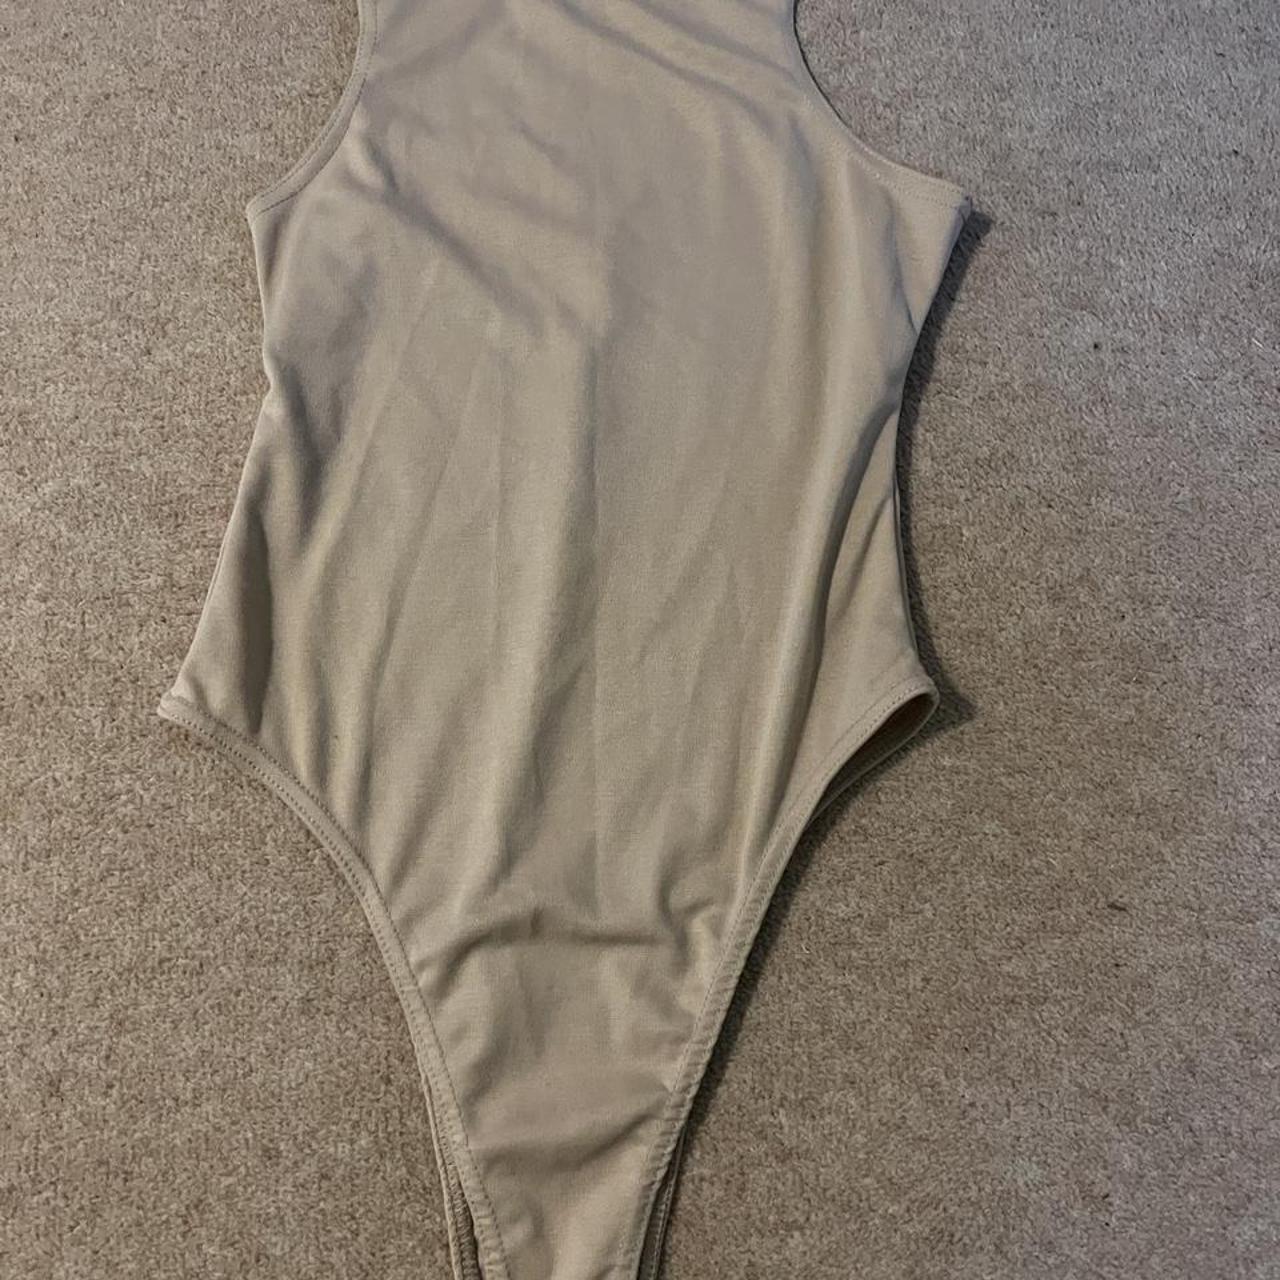 Nude thong bodysuit - Depop